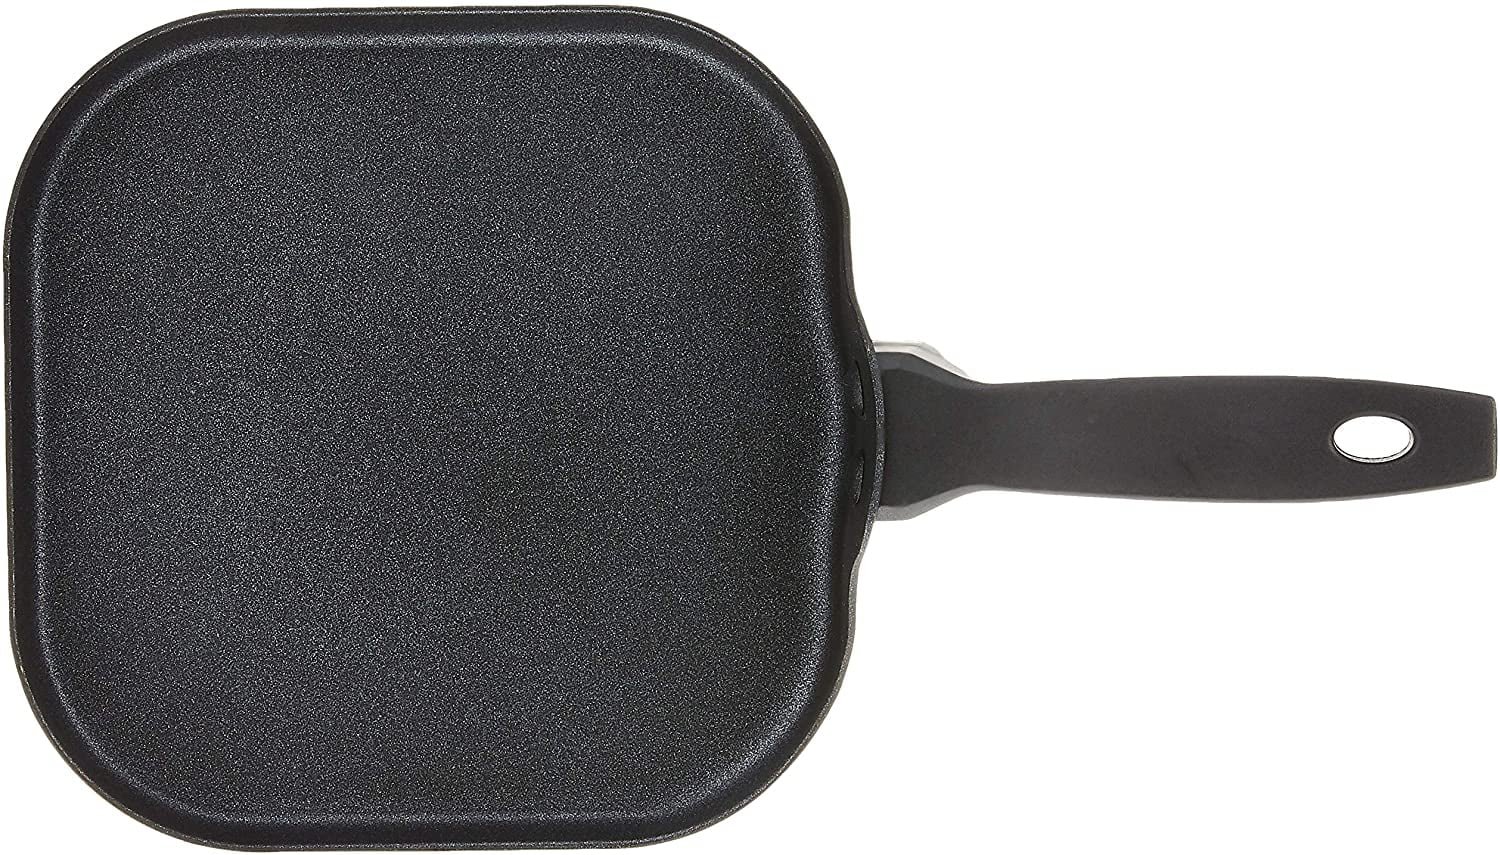 Essteele Nonstick Small Grill Plate 35 x 21cm